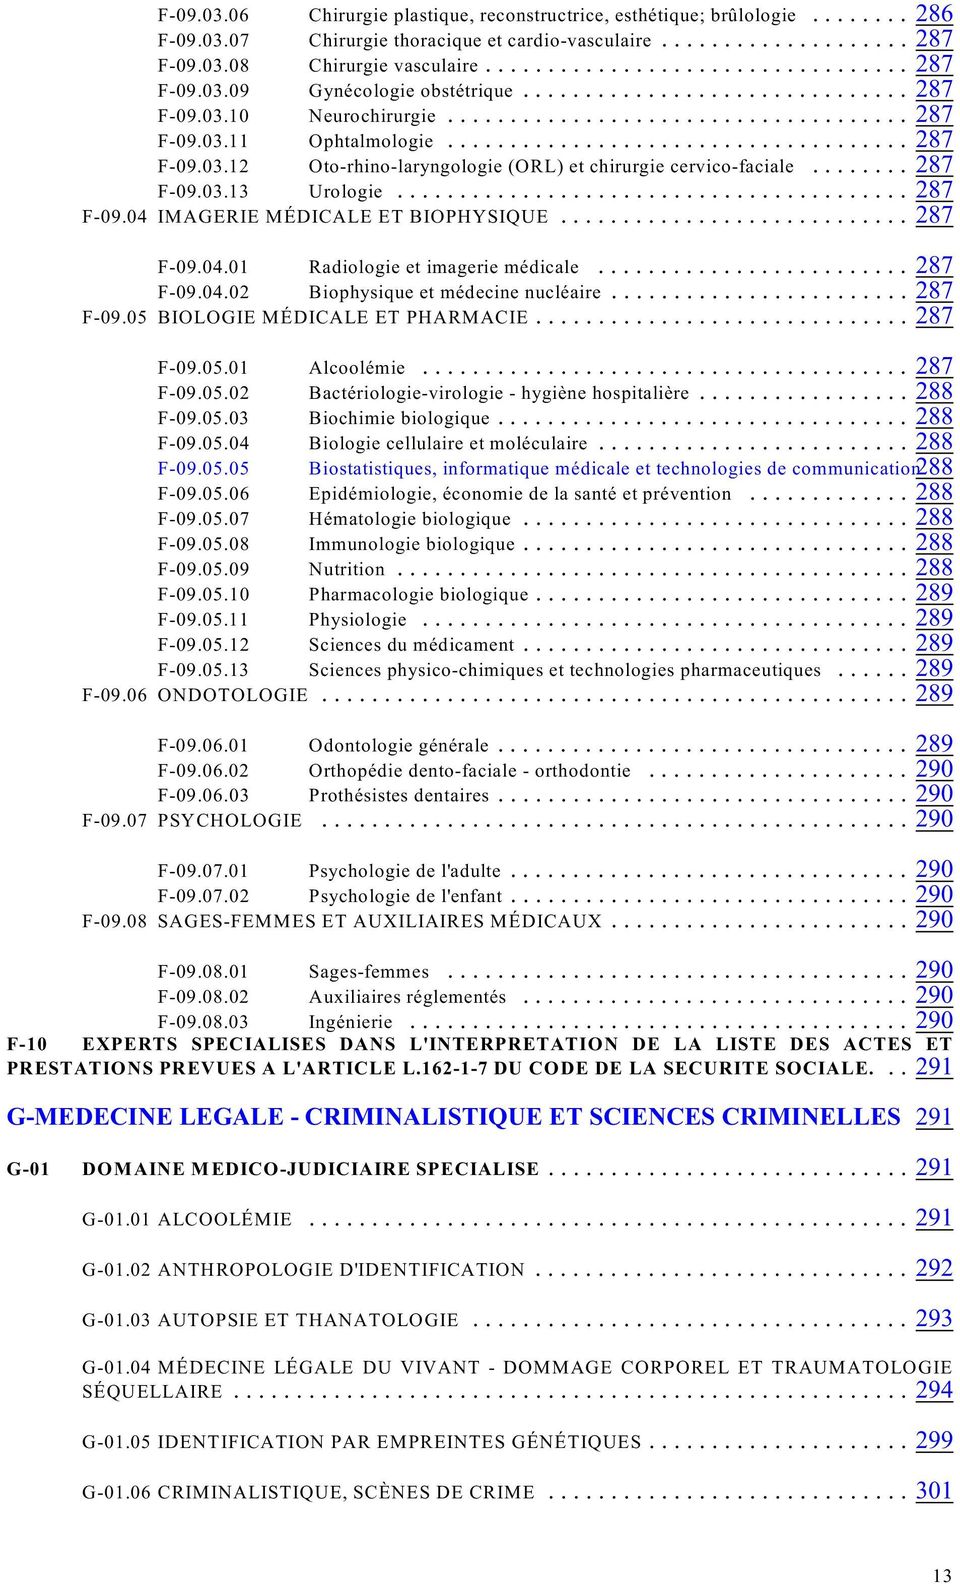 ..287 F-09.04.01 Radiologie et imagerie médicale...287 F-09.04.02 Biophysique et médecine nucléaire...287 F-09.05 BIOLOGIE MÉDICALE ET PHARMACIE...287 F-09.05.01 Alcoolémie...287 F-09.05.02 Bactériologie-virologie - hygiène hospitalière.